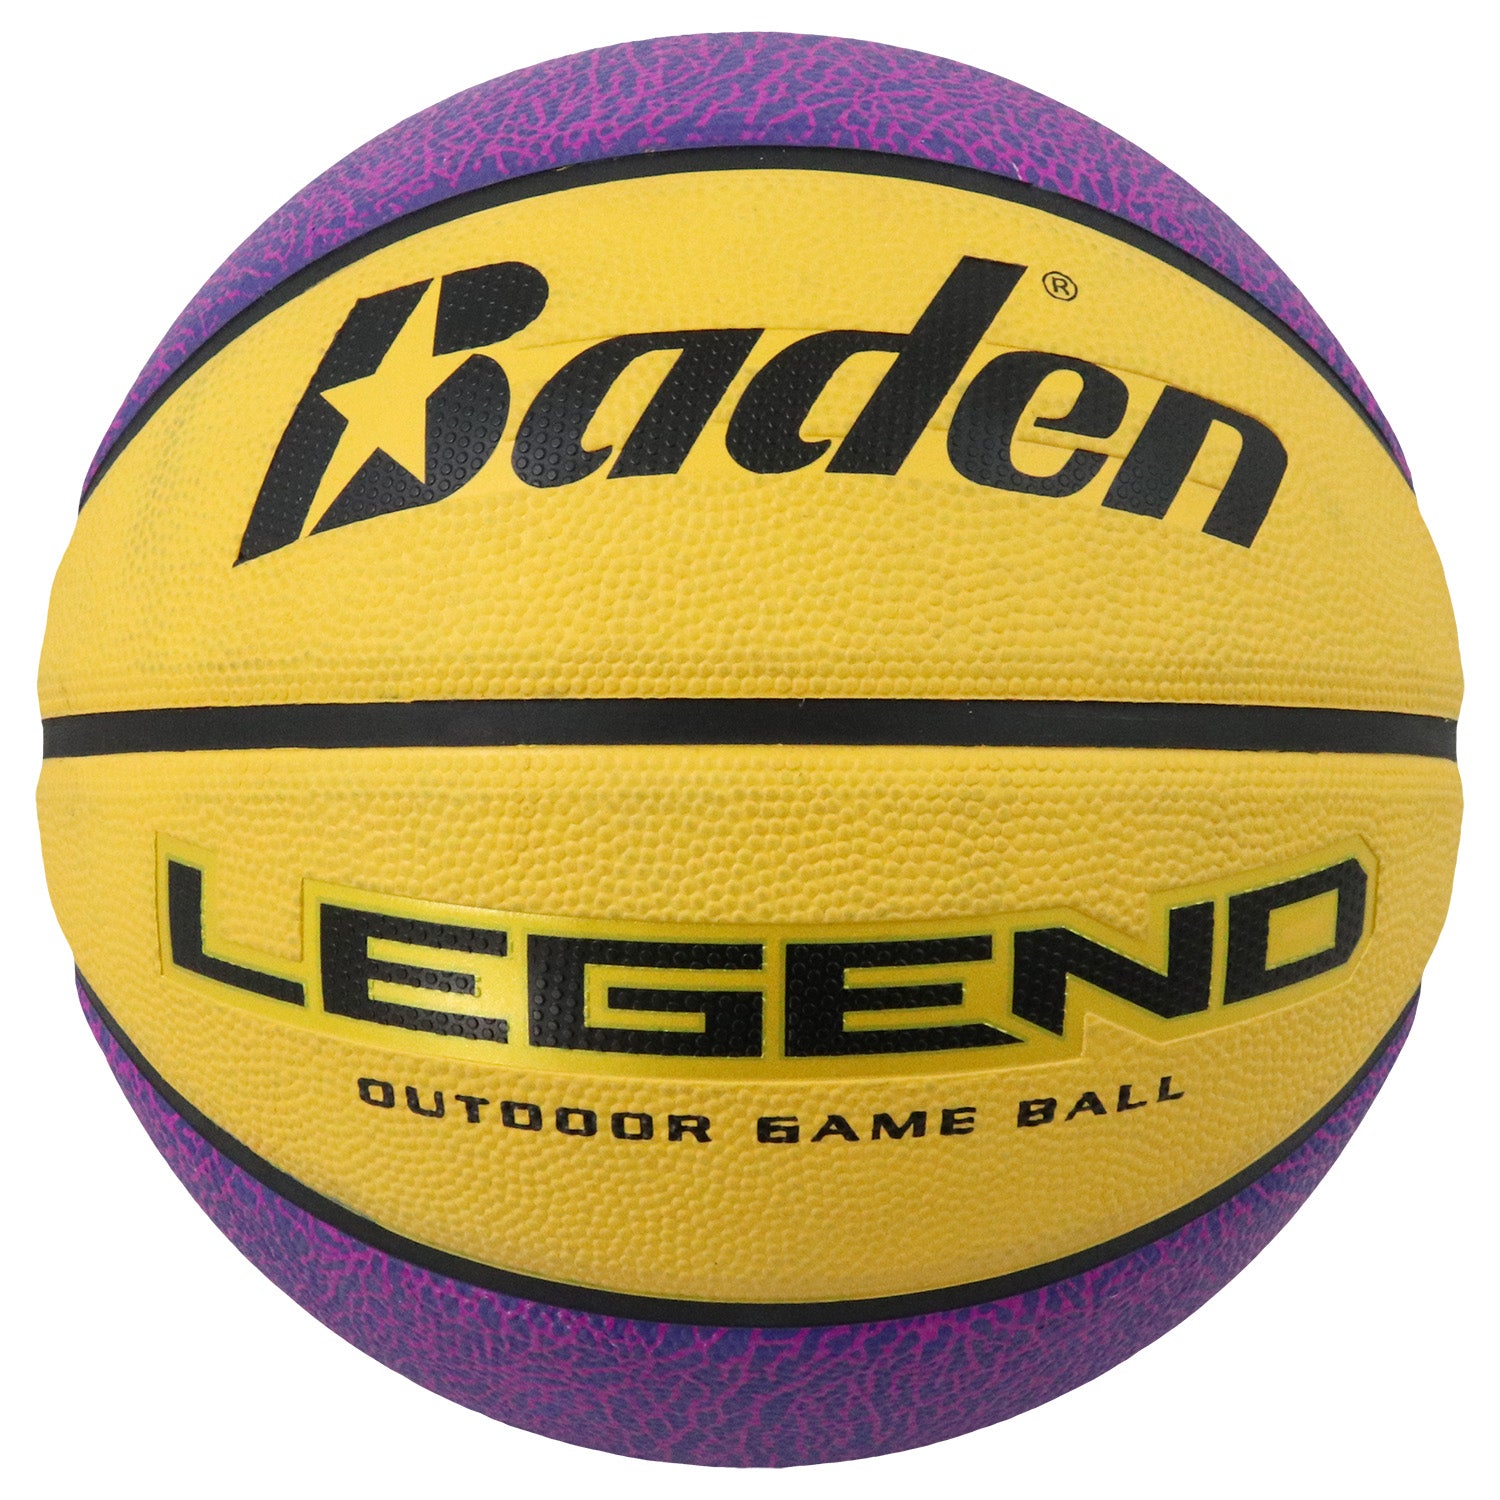 Legend Outdoor Game Rubber Basketball - Baden Sports